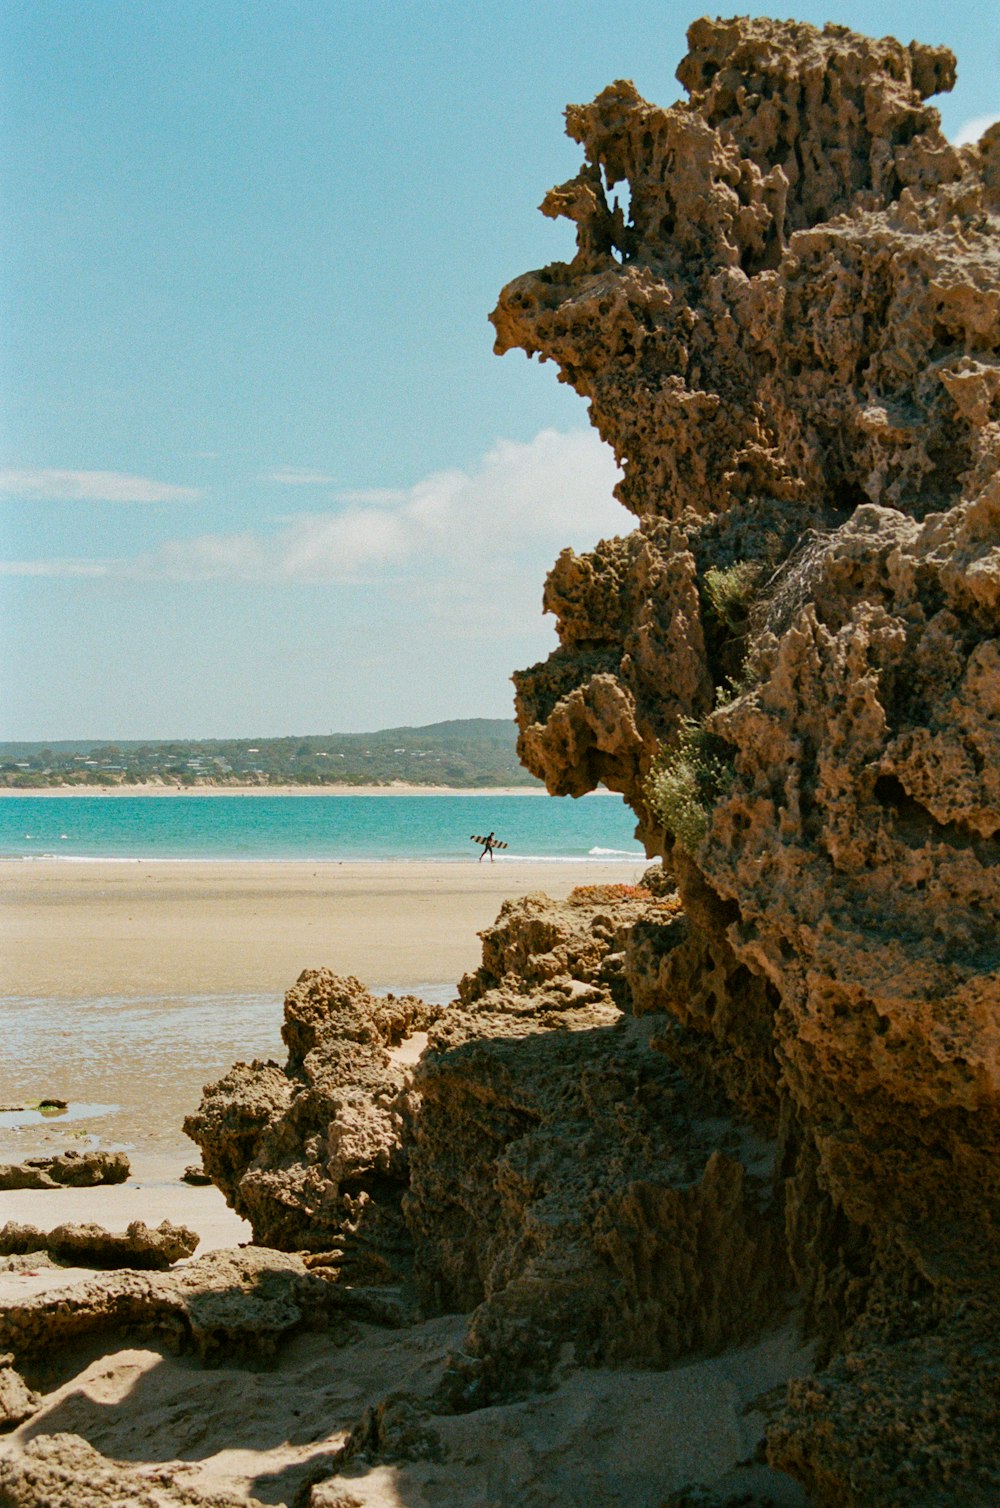 brown rock reef near seashore